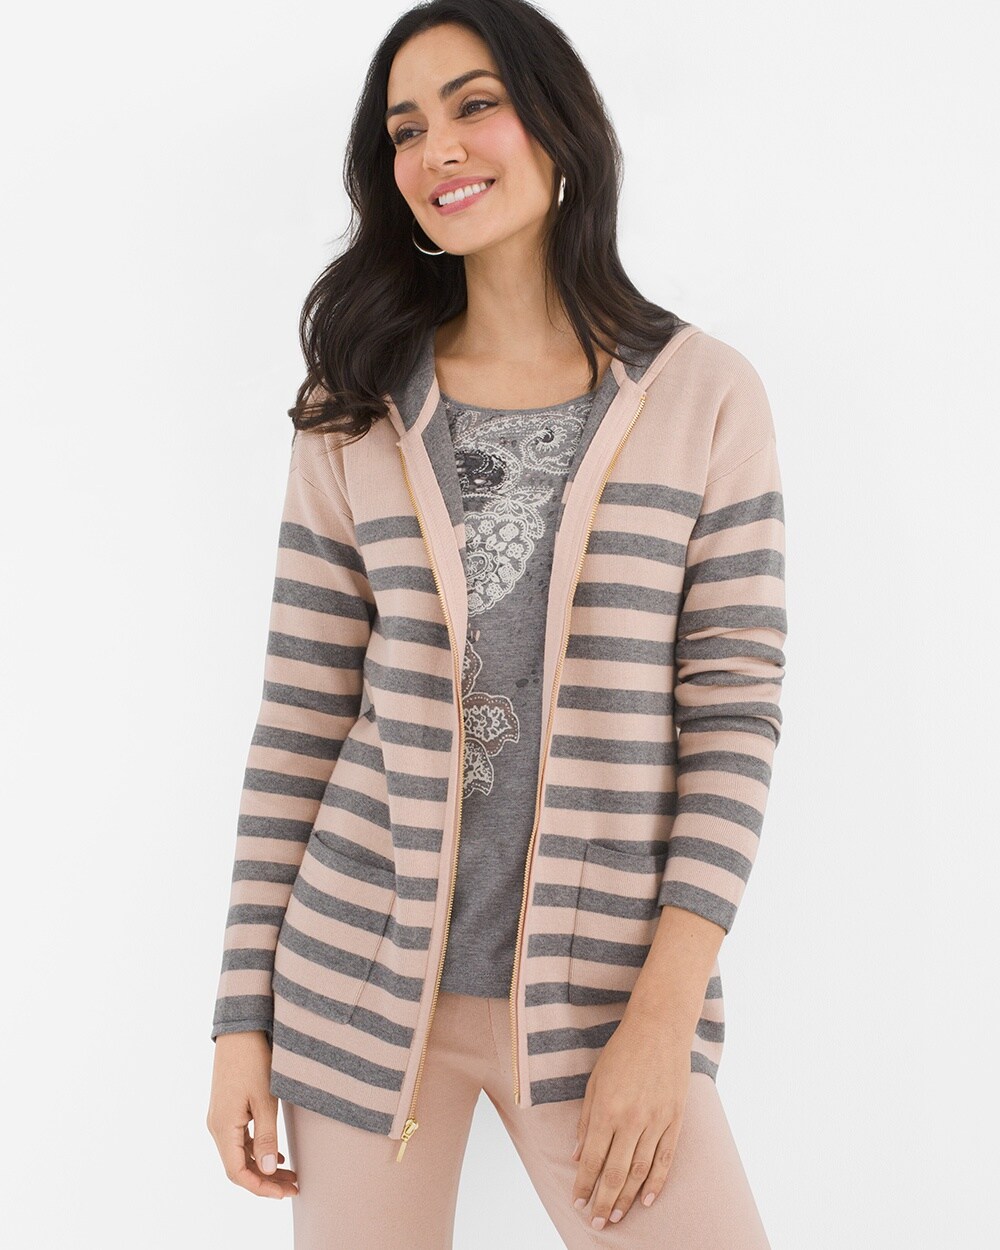 Zenergy Striped Cotton Cashmere-Blend Jacket